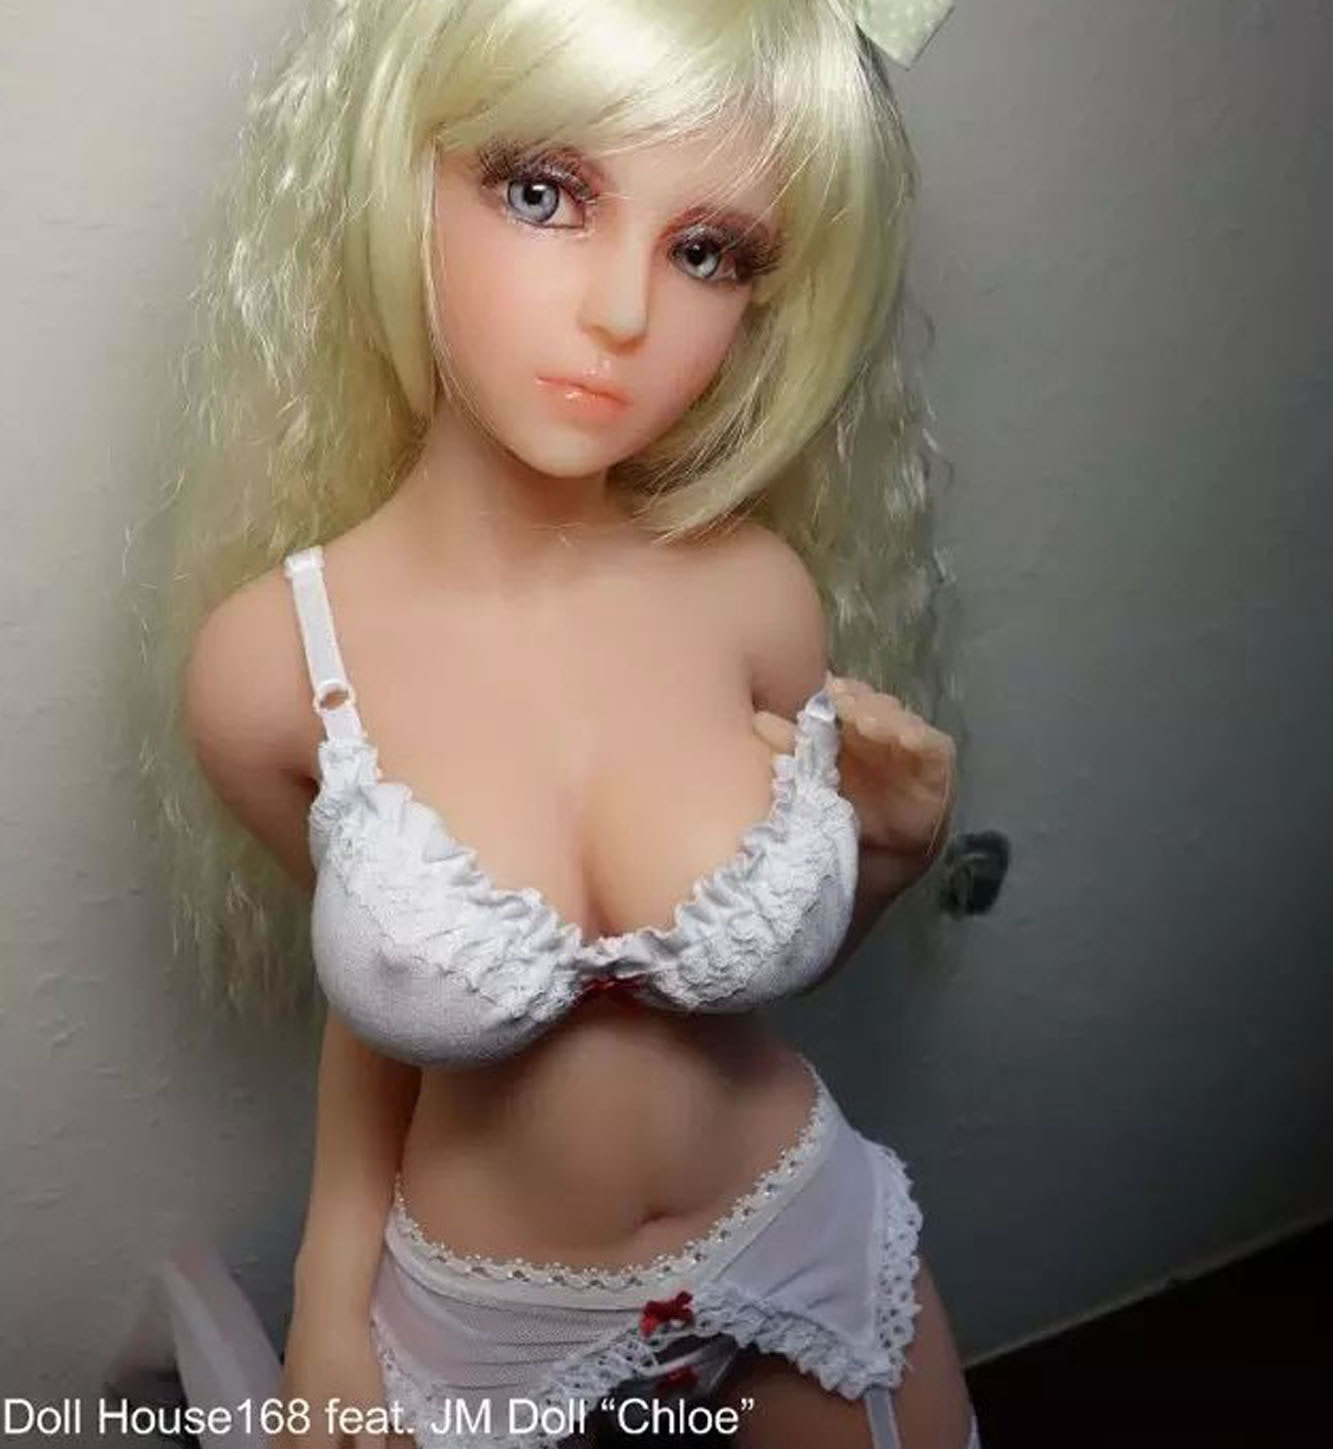 65 cm sex doll